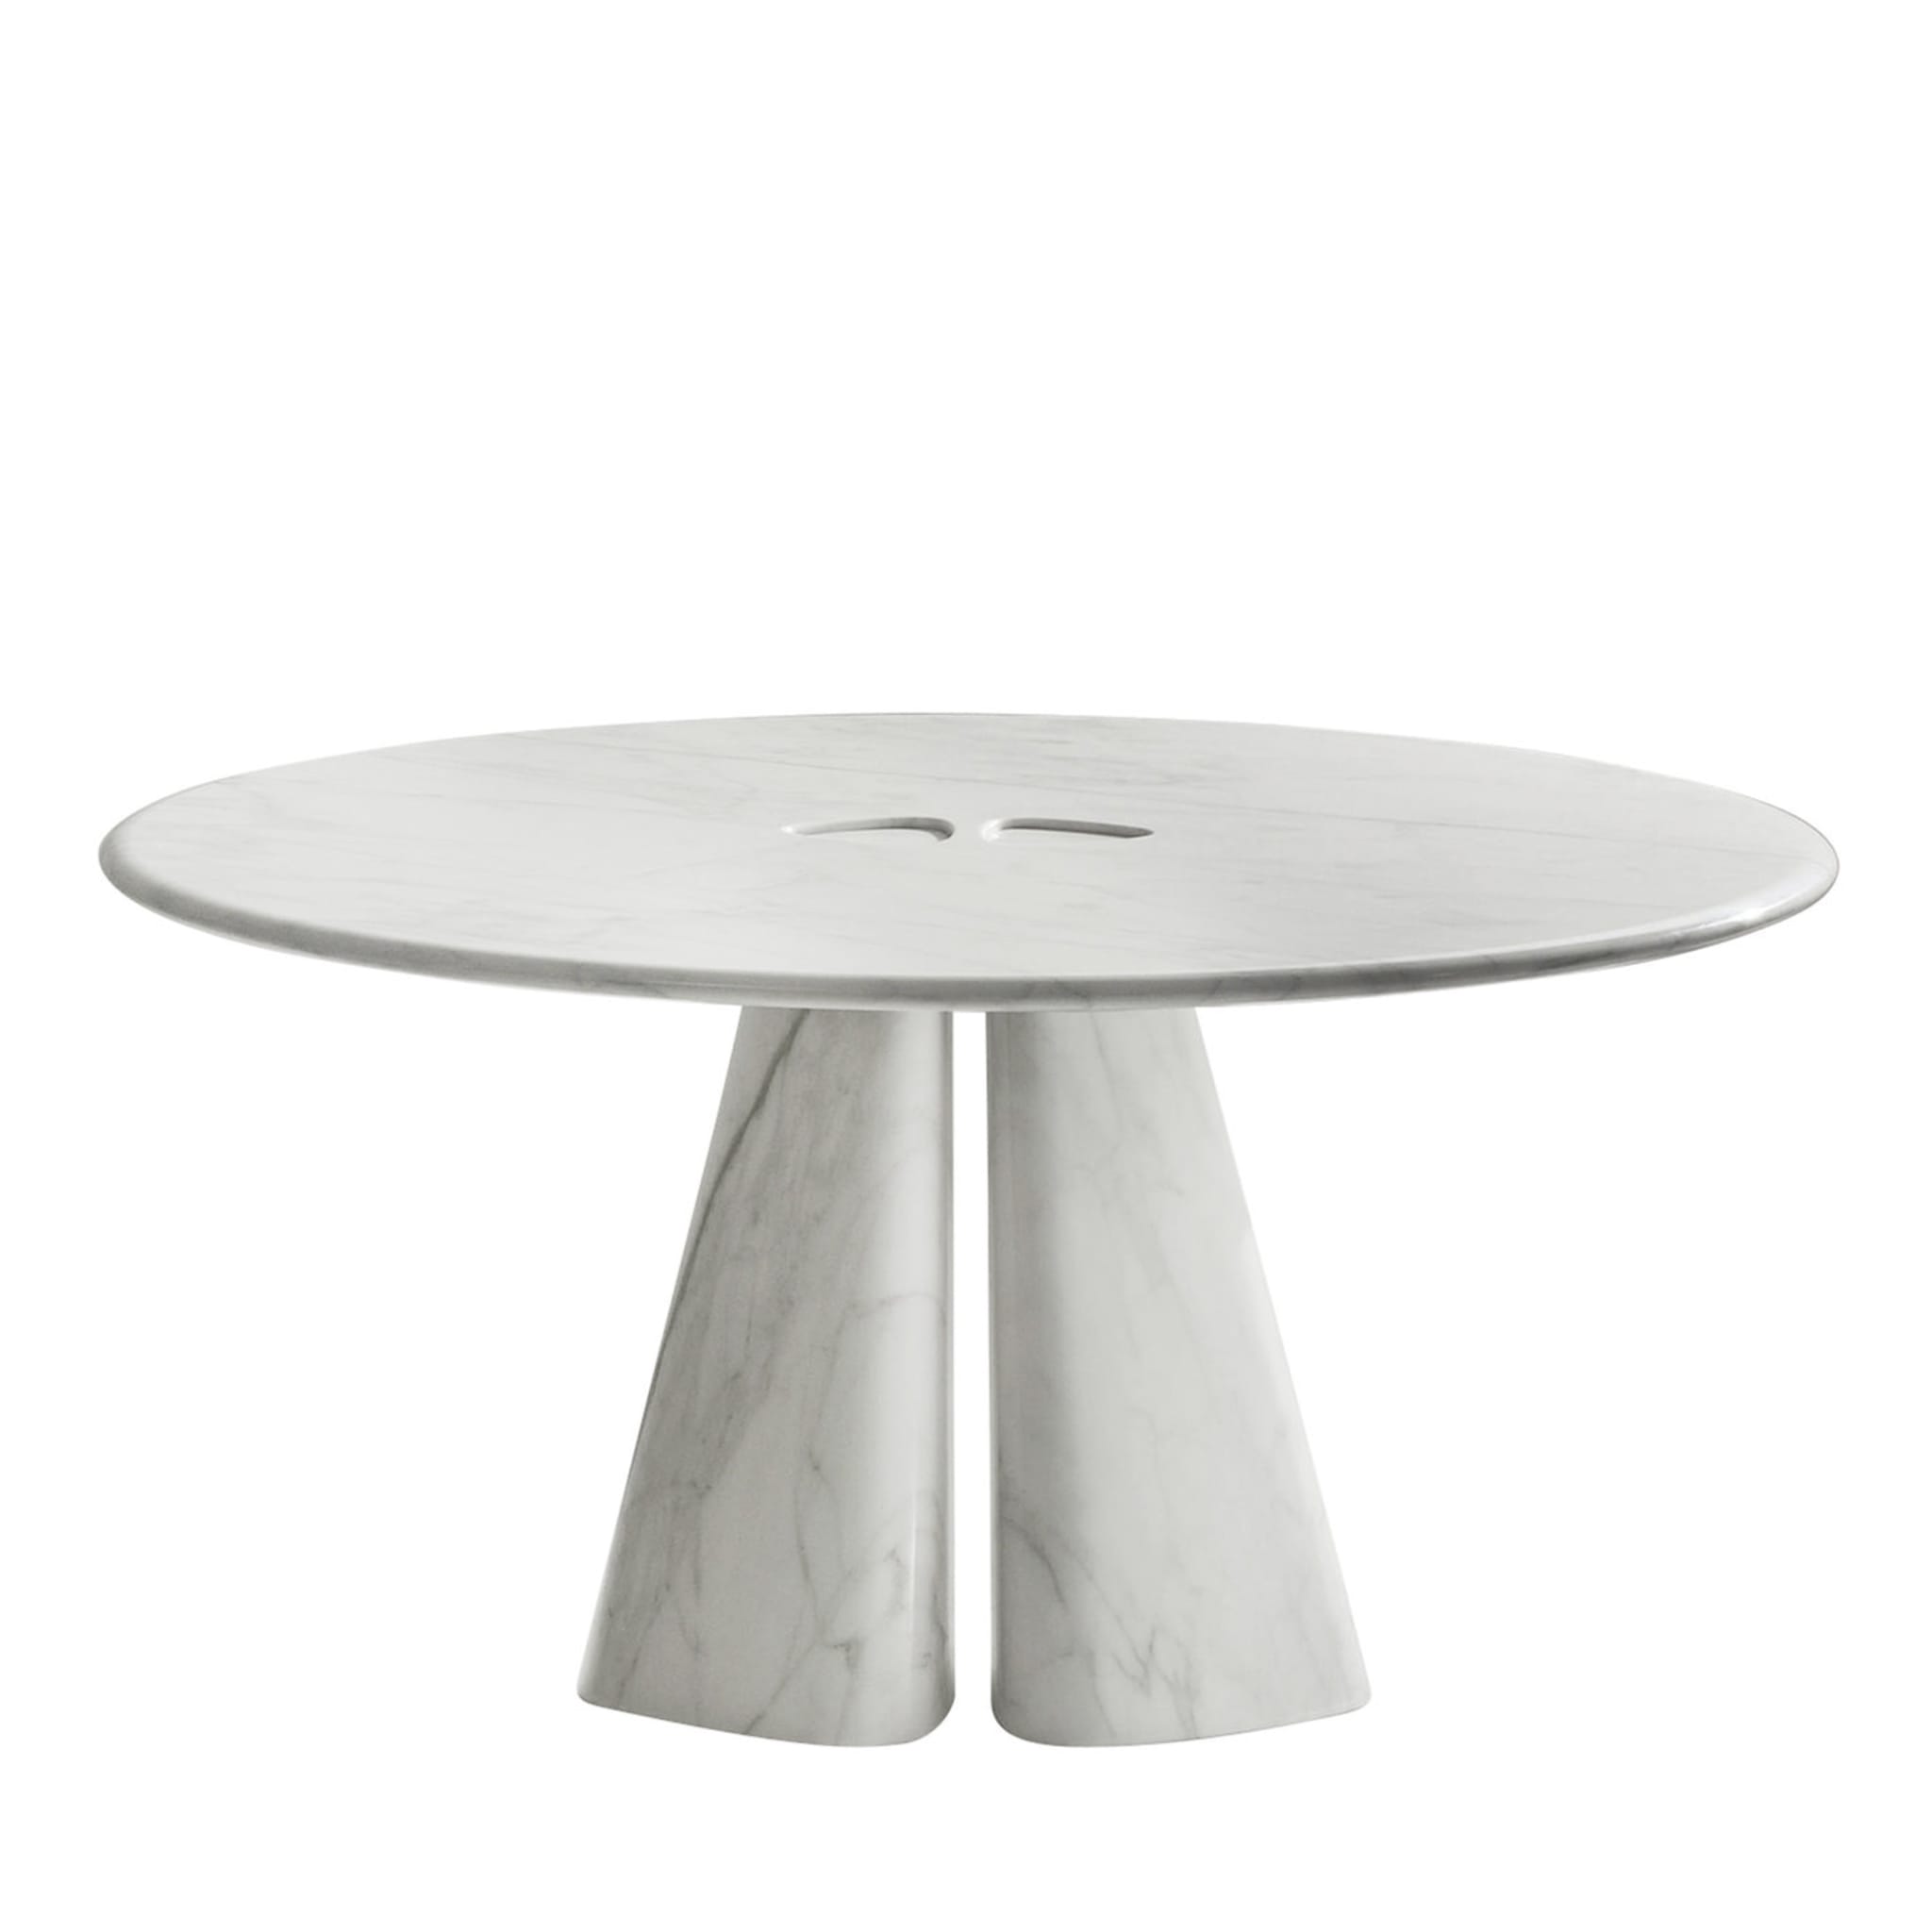 Raja Round Table by Bartoli Design - Main view